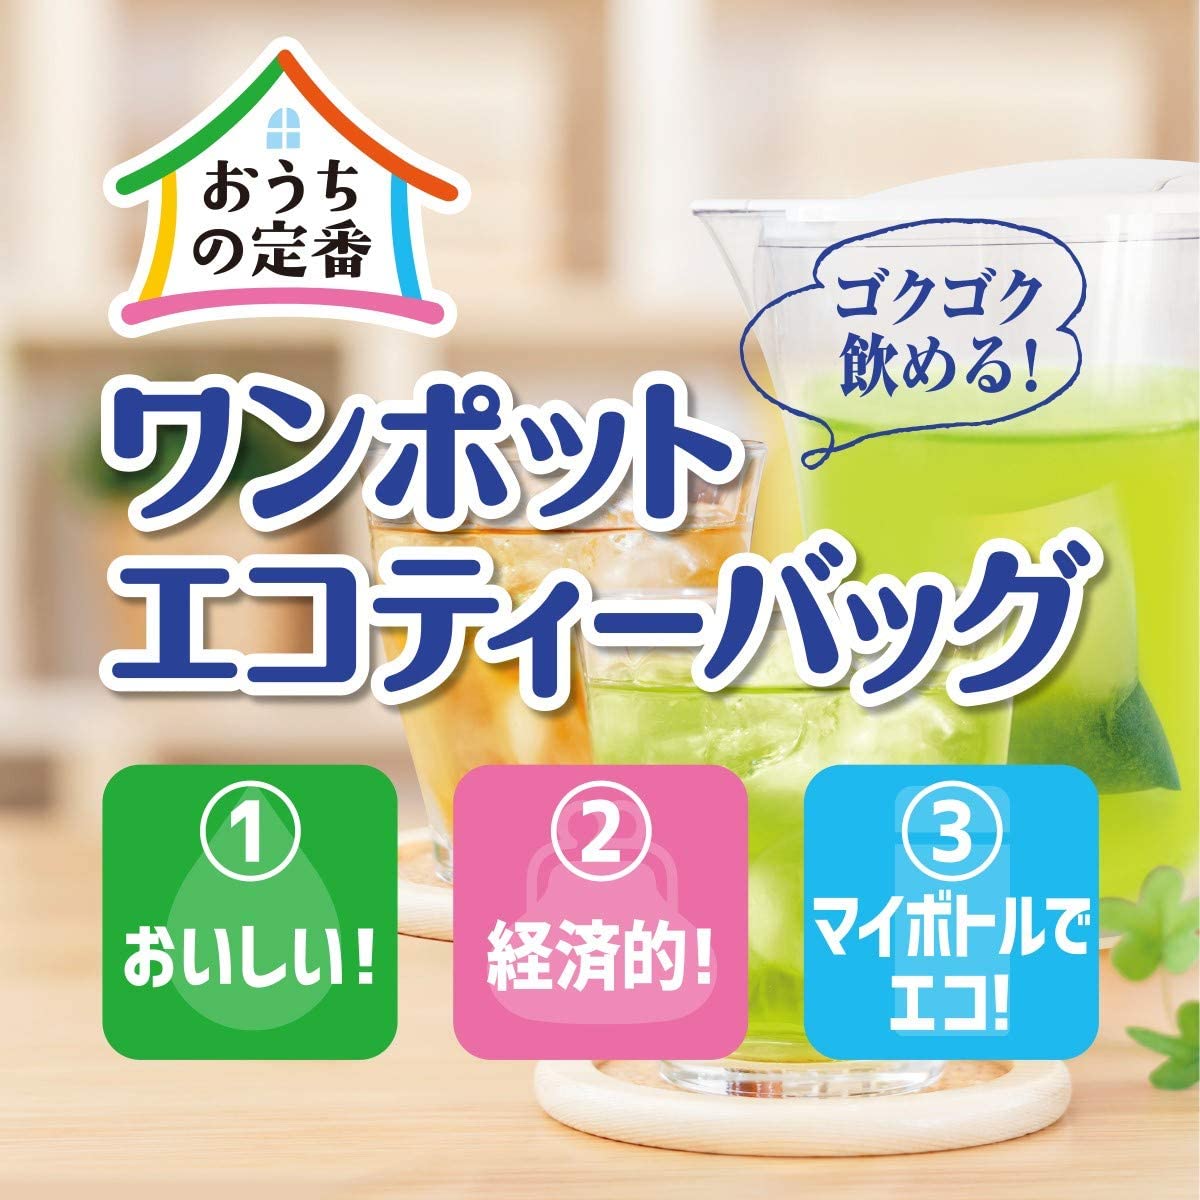 Ito En One Pot Roasted Tea Eco Tea Bag 3.5g x 50 Teabags x 4 Packs - NihonMura